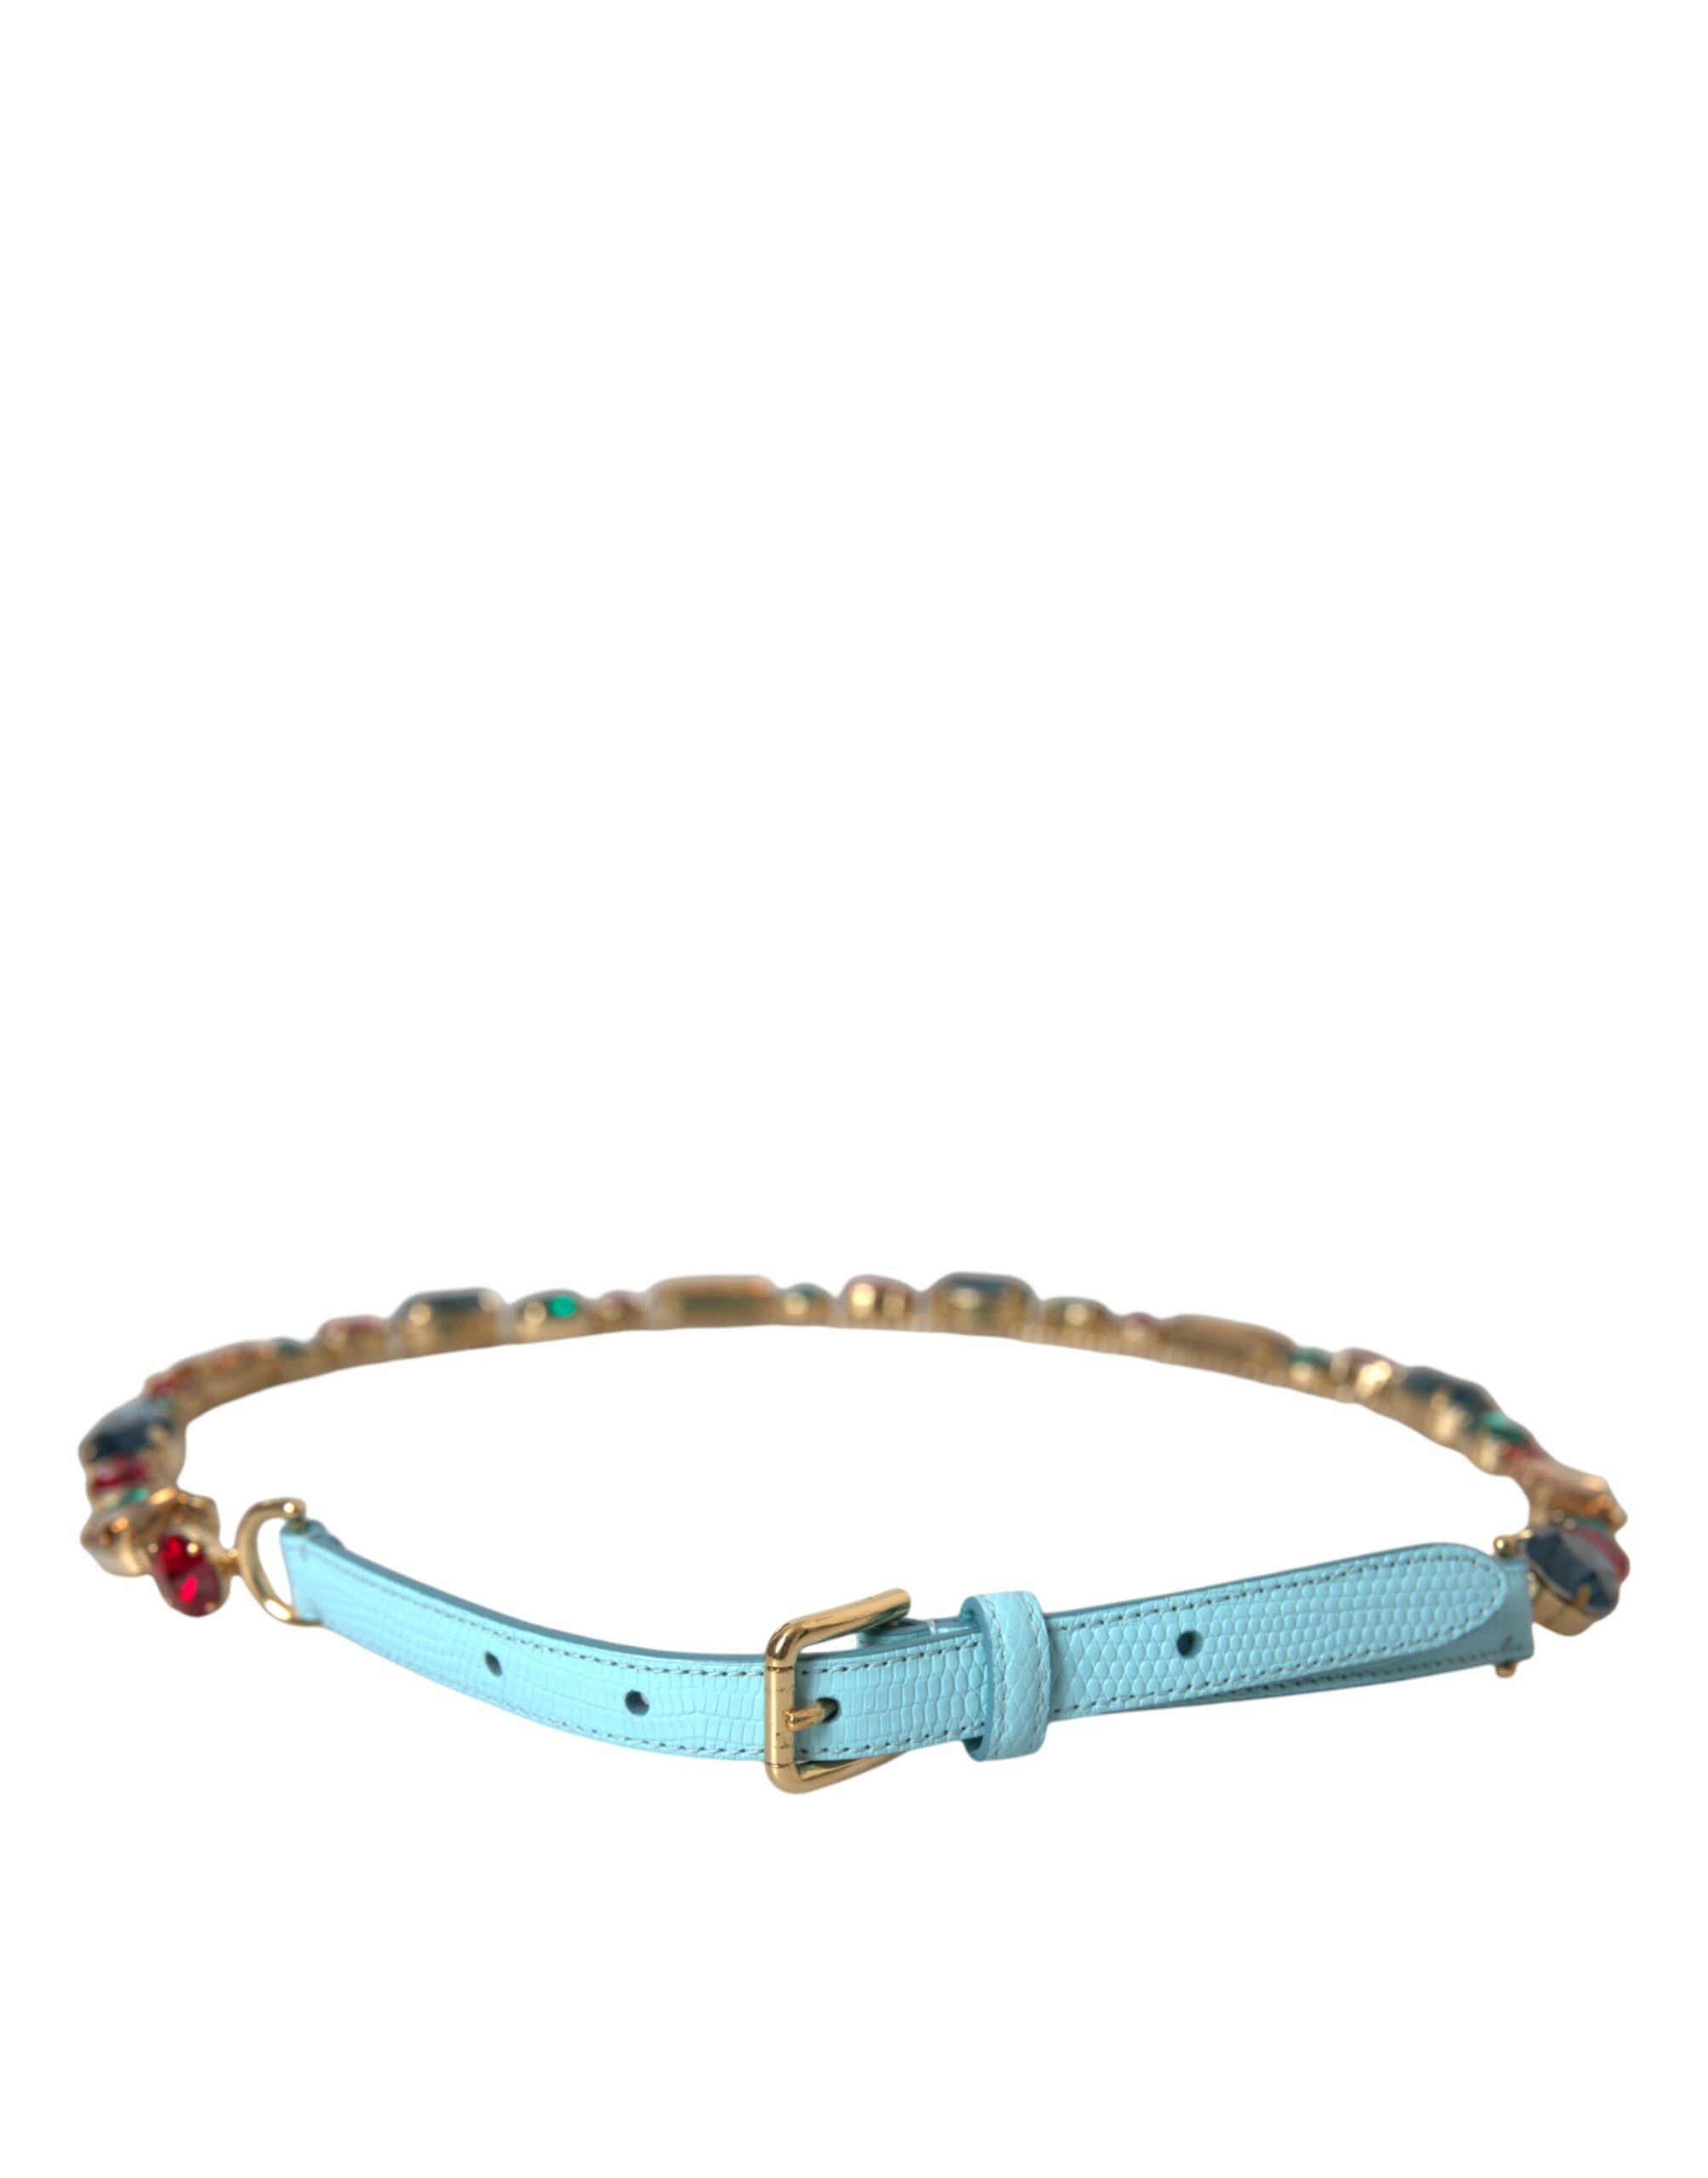 Dolce Gabbana Light Blue Leather Crystal Chain Waist Belt 85 cm 34 Inches